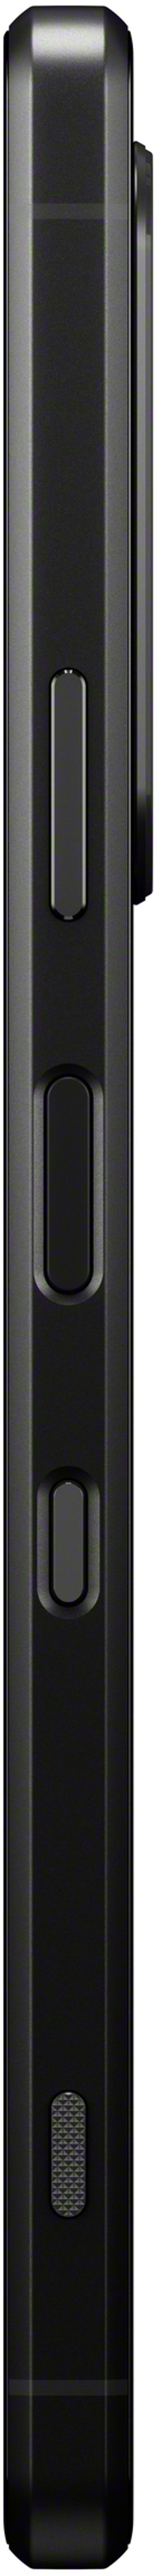 Sony XPERIA 1 III + WH-1000XM3 256GB Dual-SIM Svart